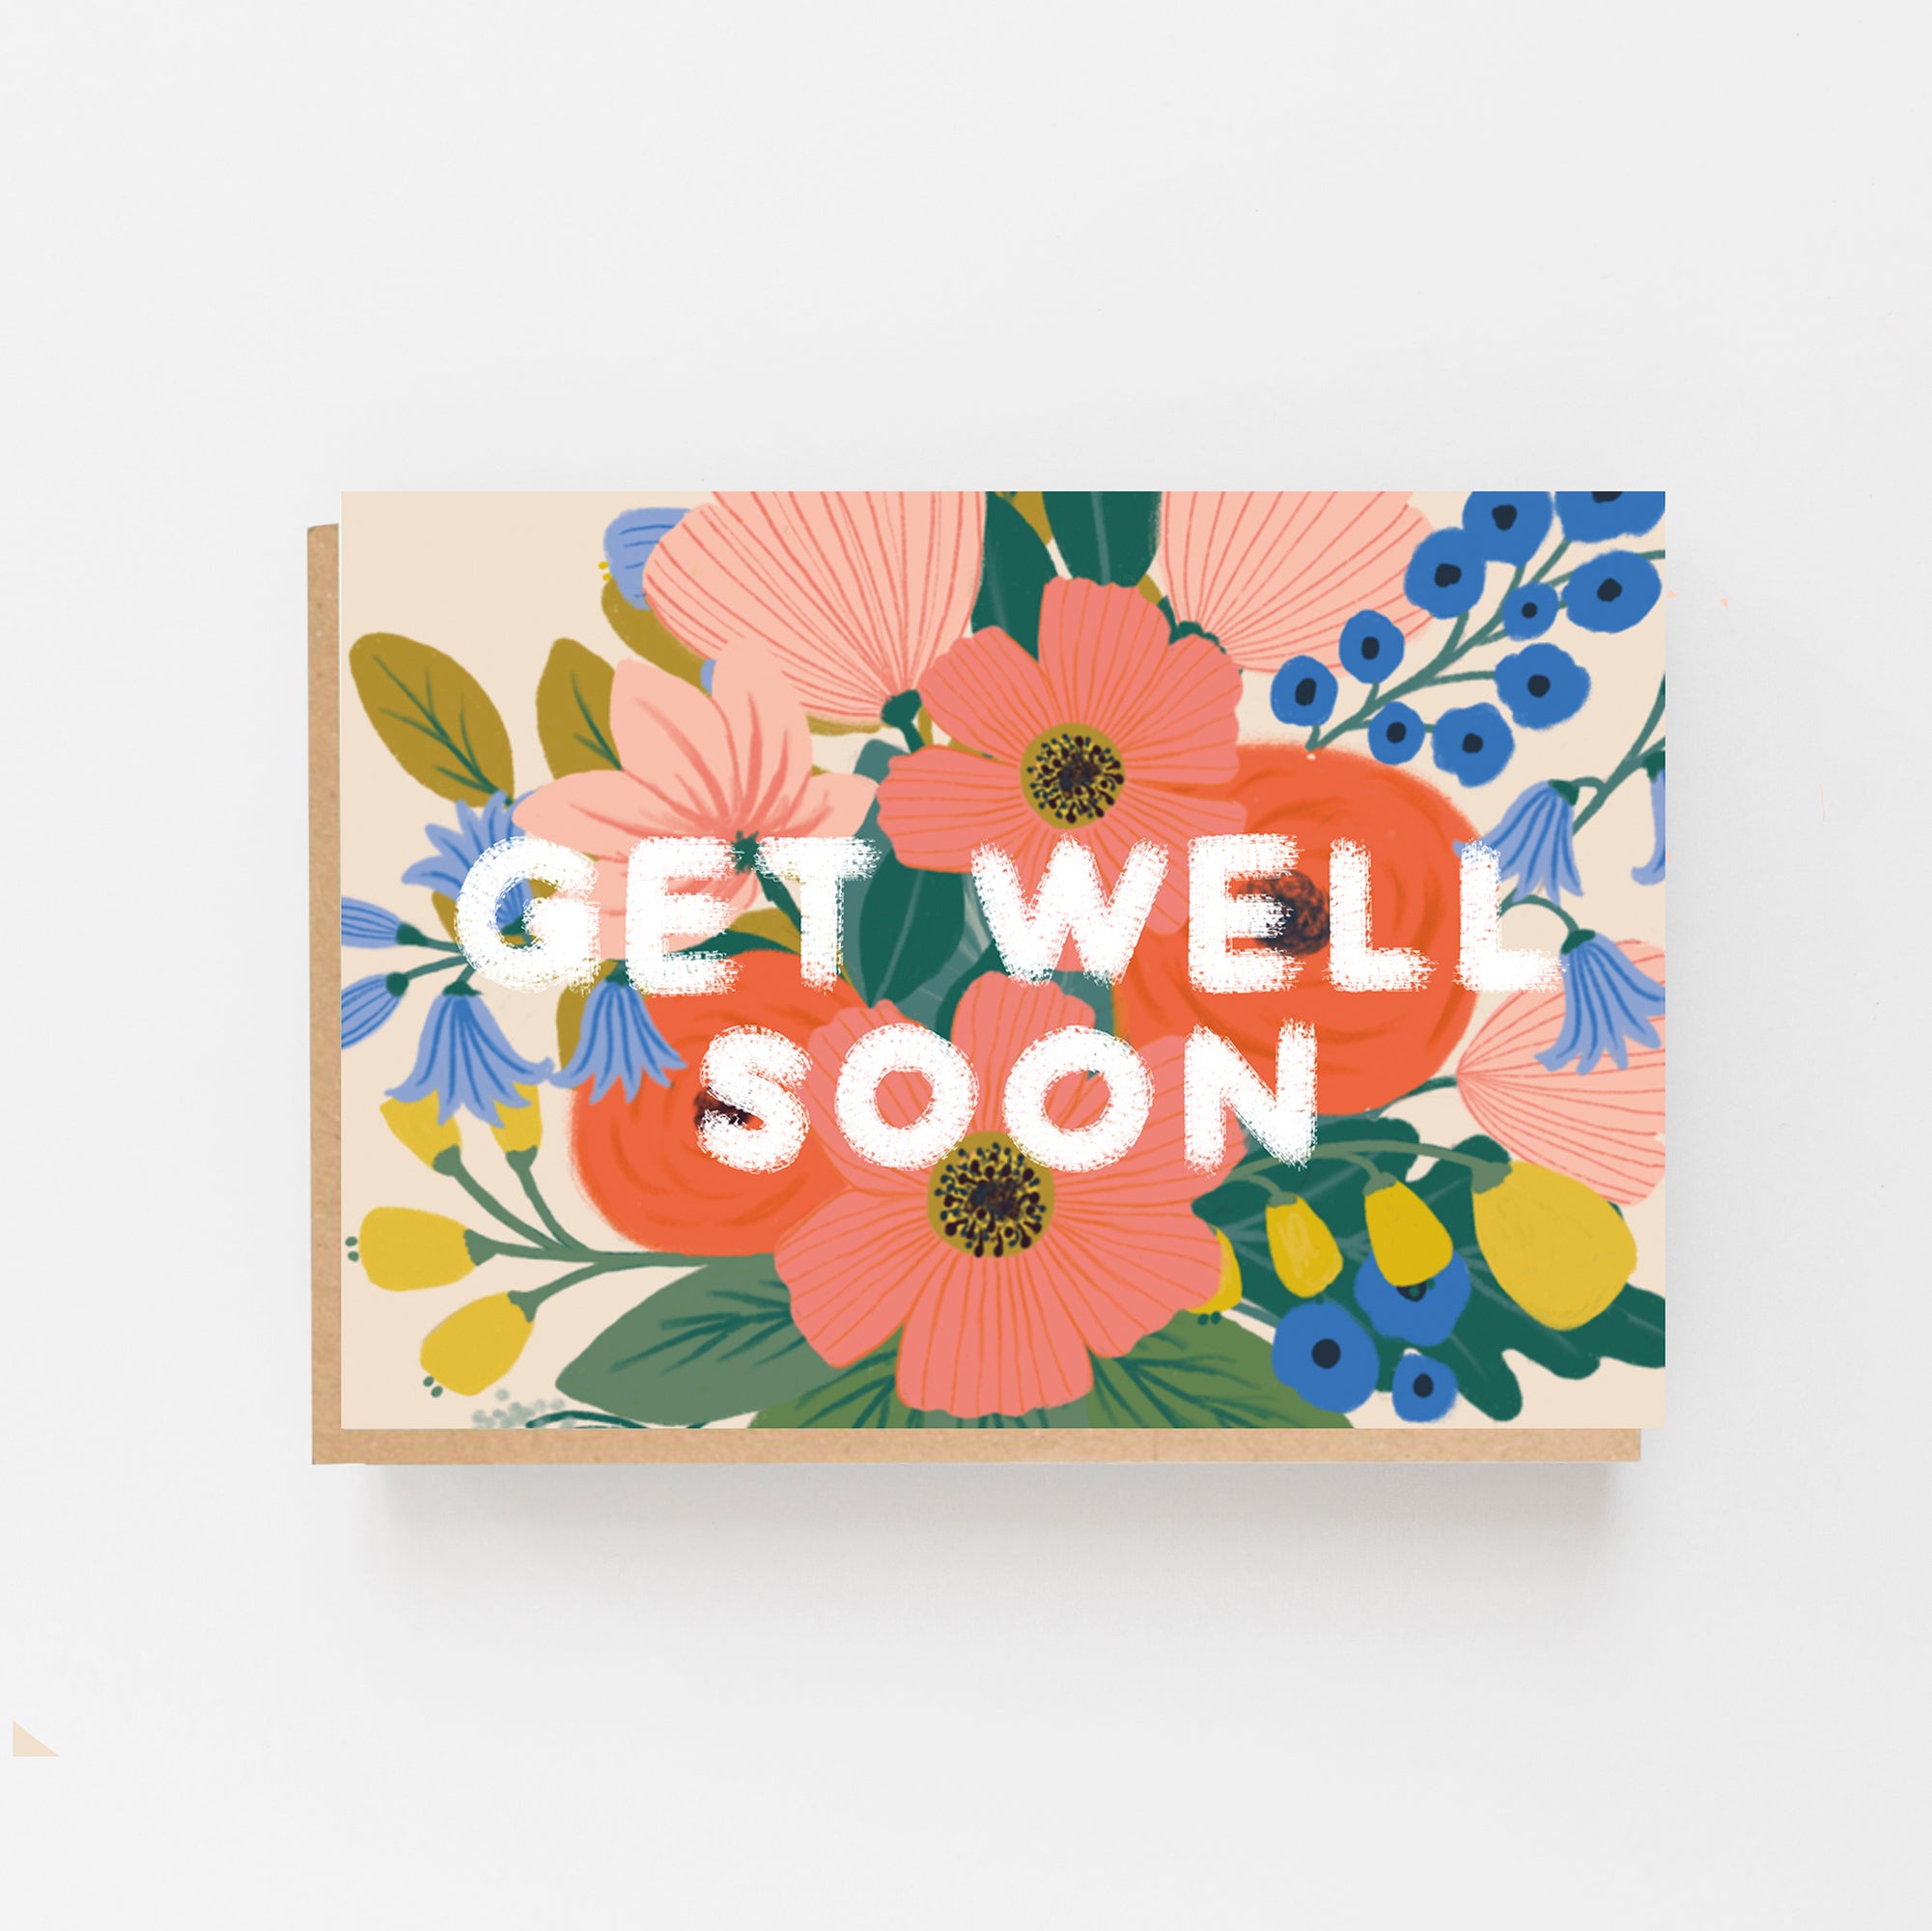 Get well soon card - lomond paper co.